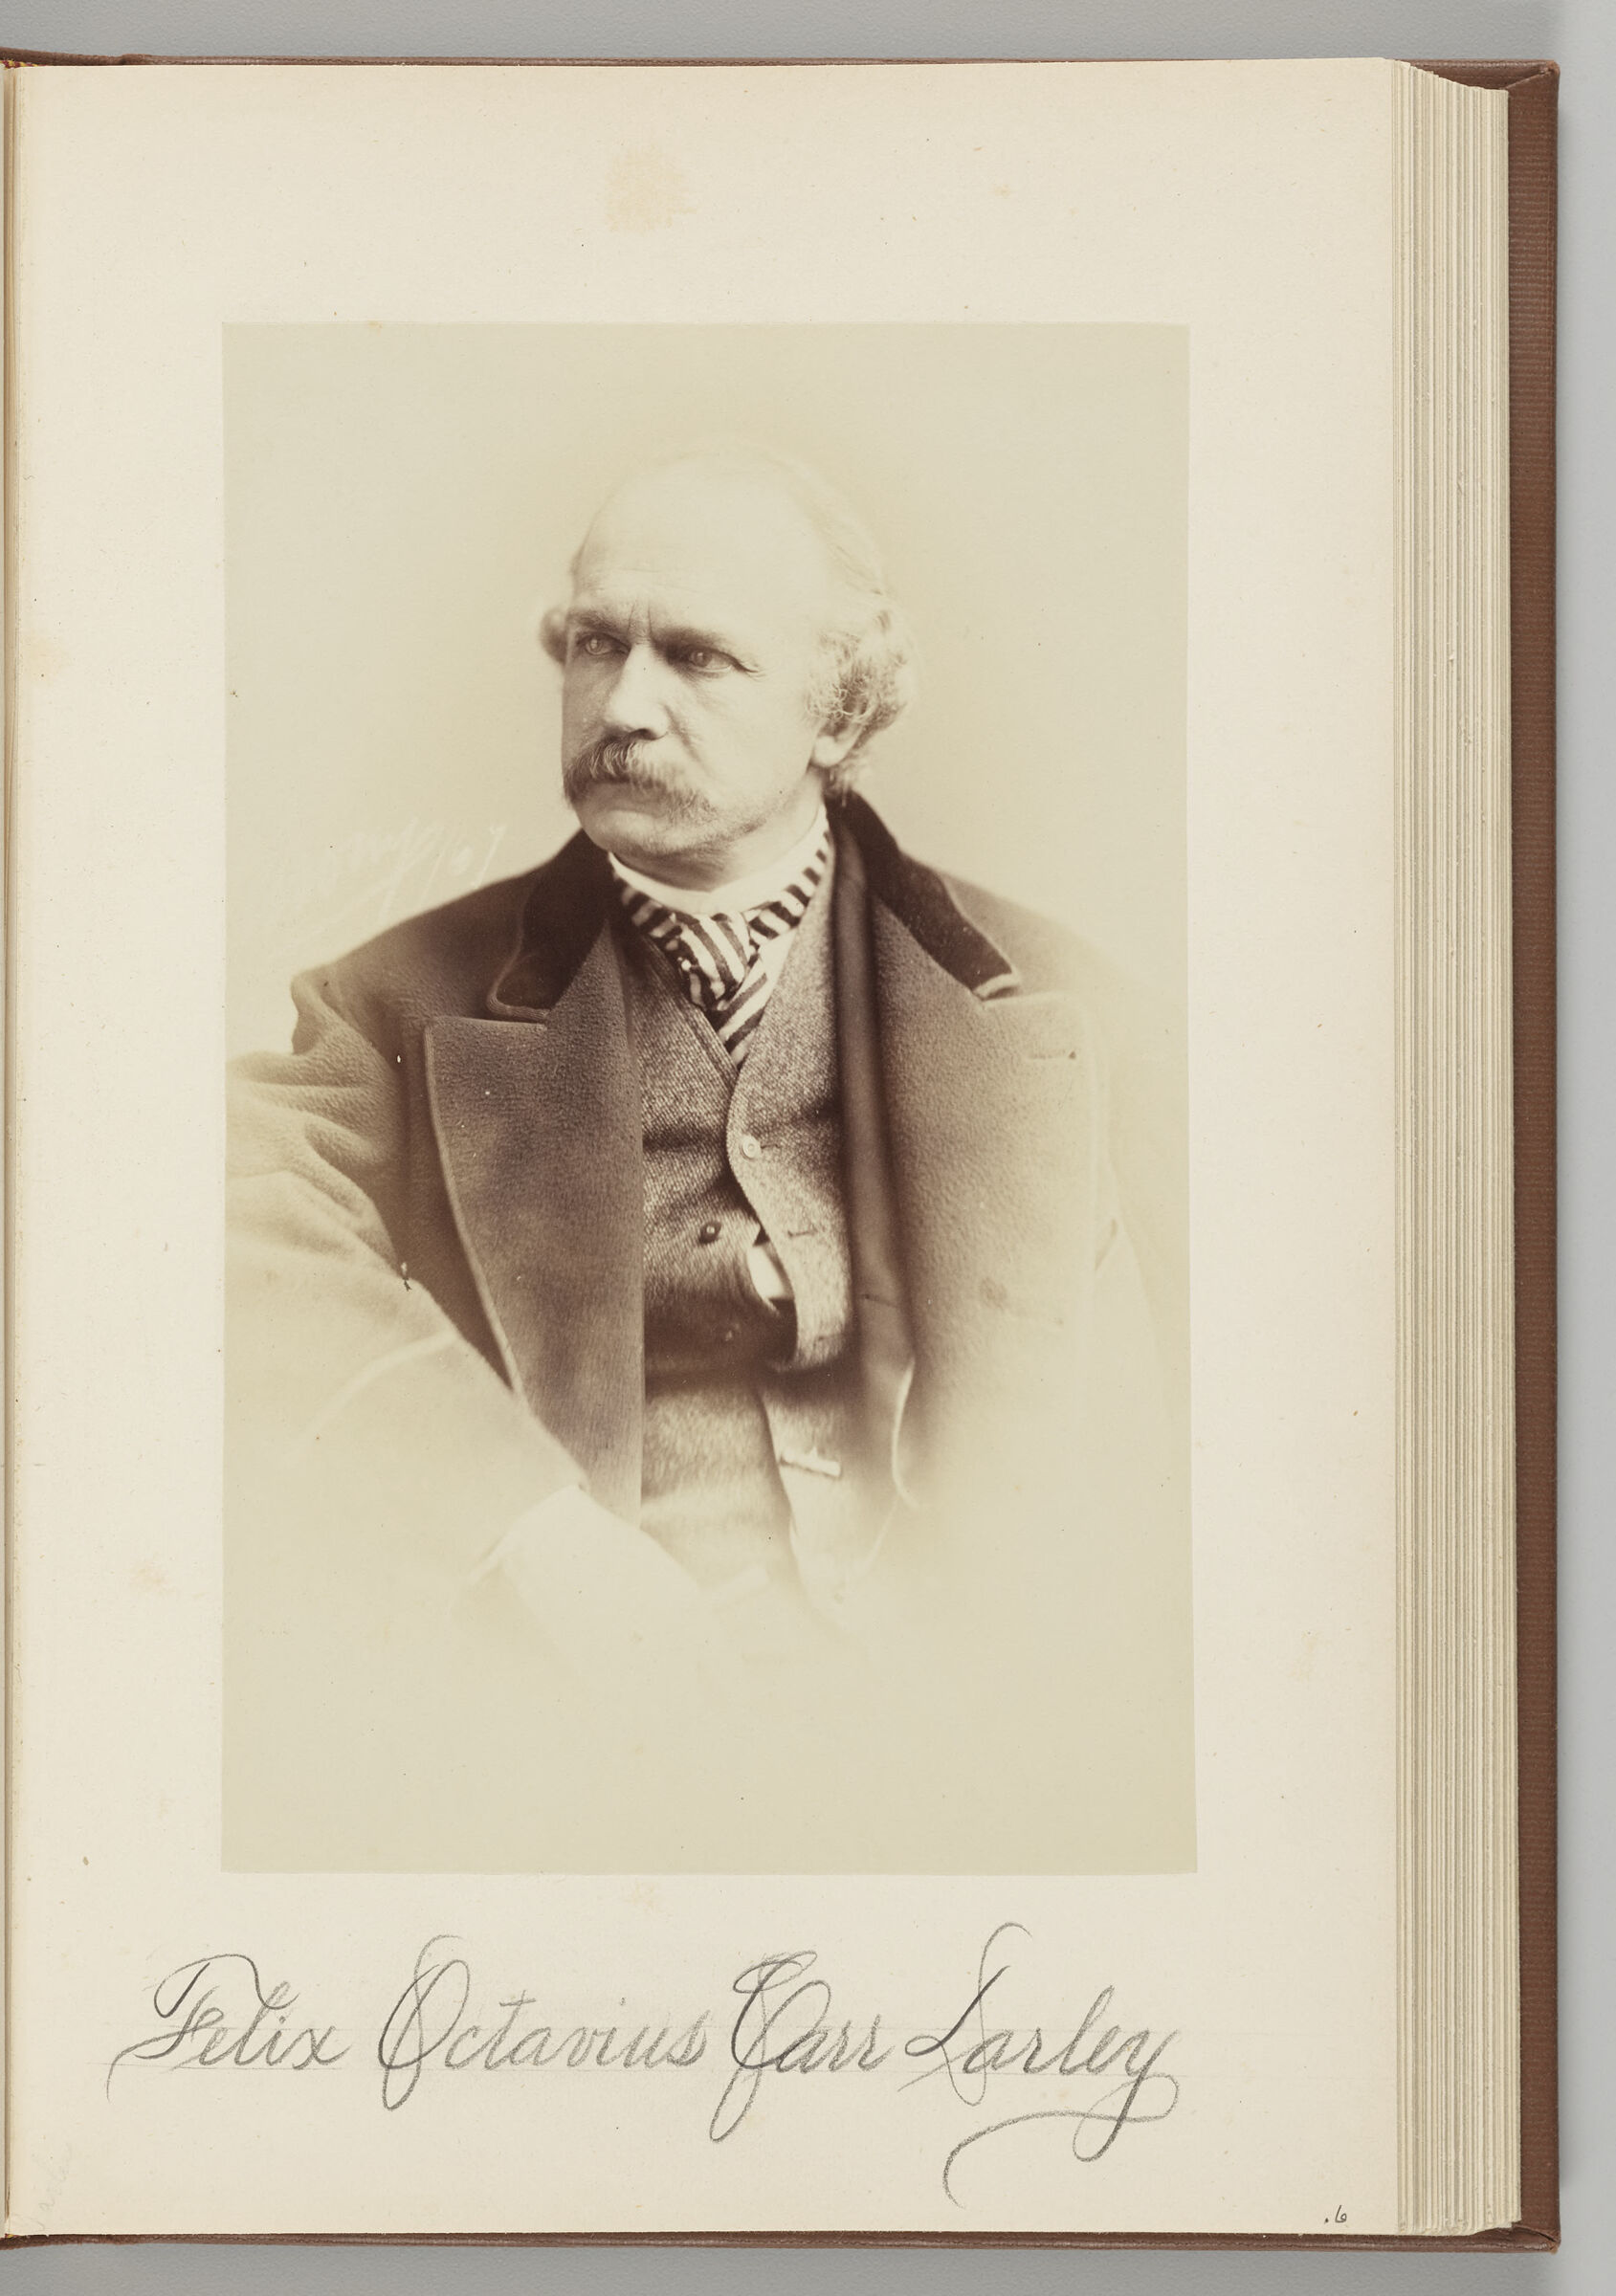 Felix Octavius Carr Darley (1822-1888)